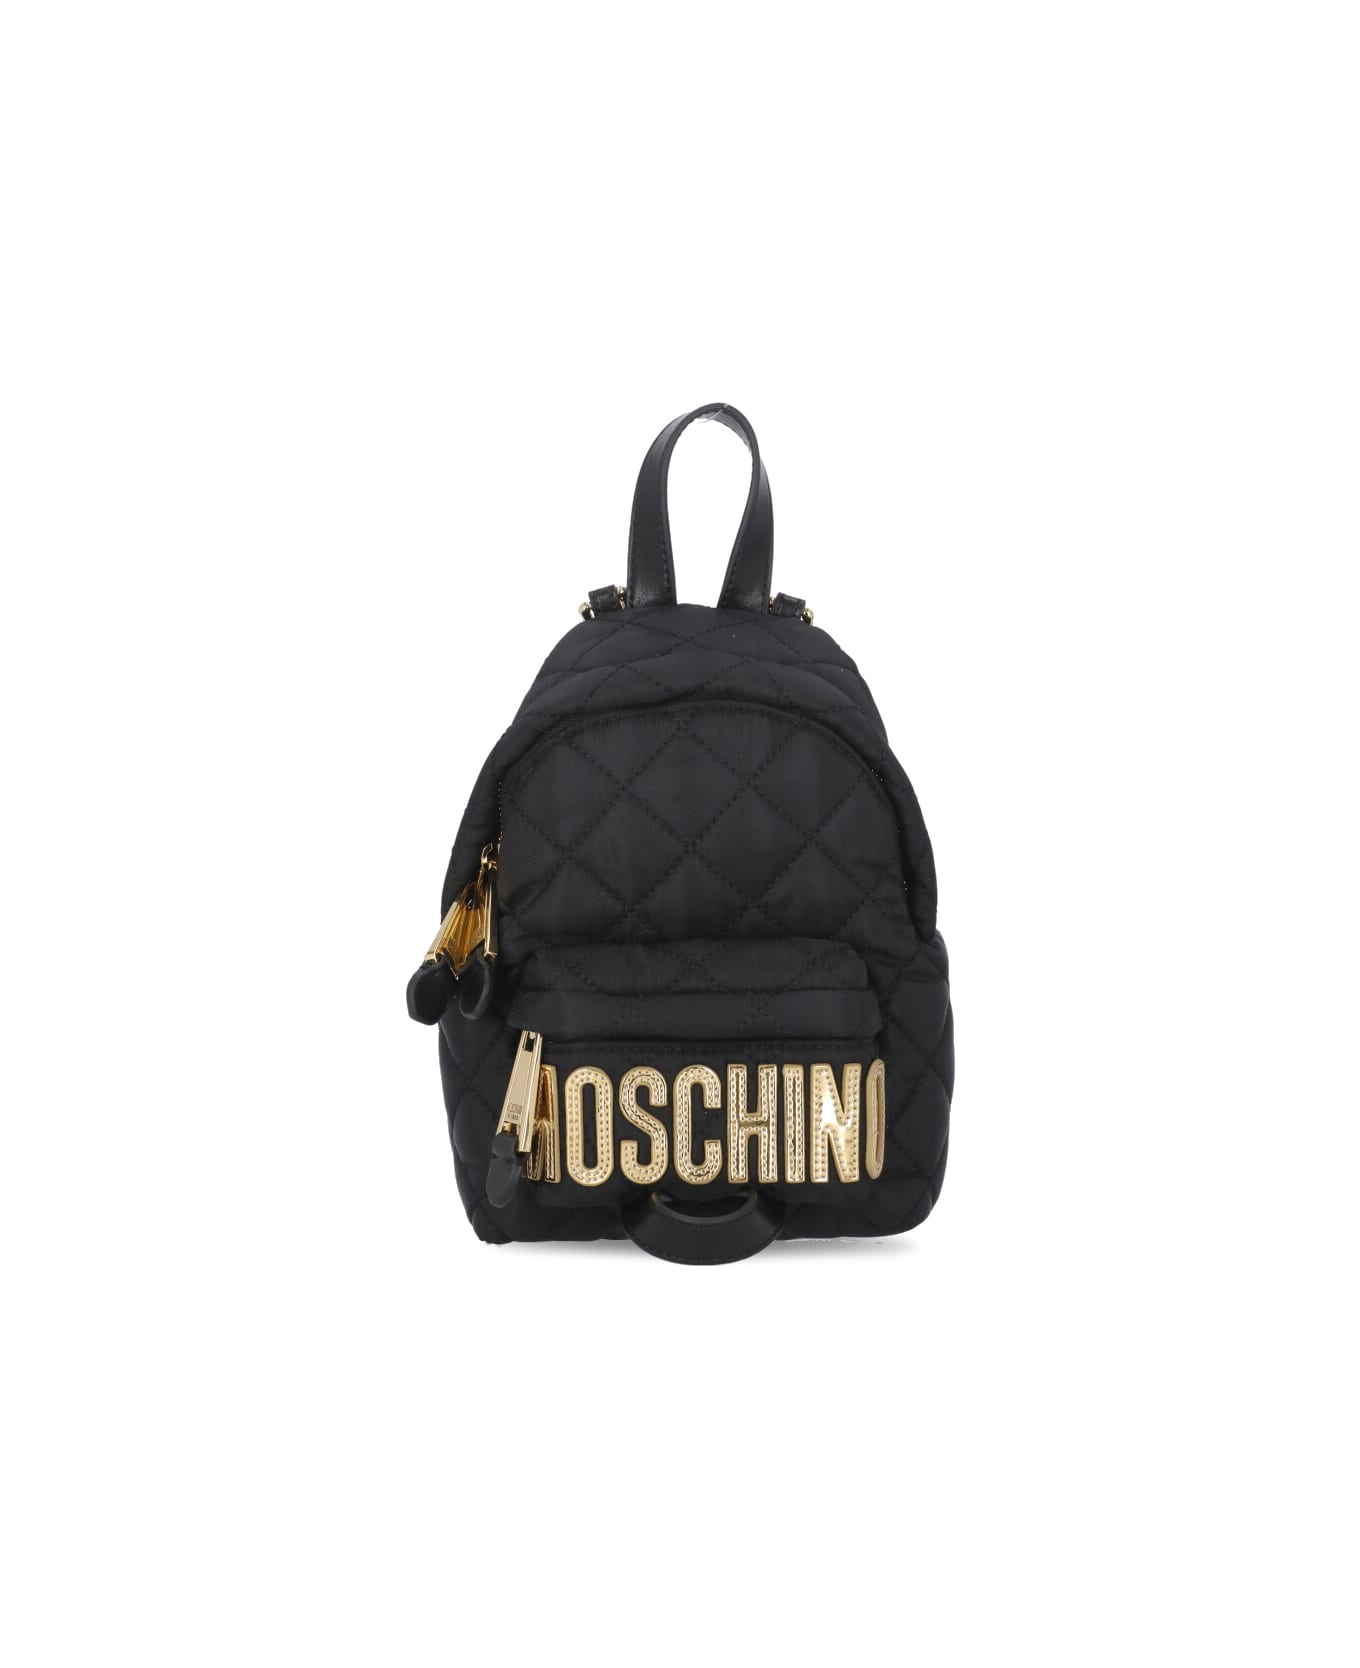 Moschino Logo Backpack - Black